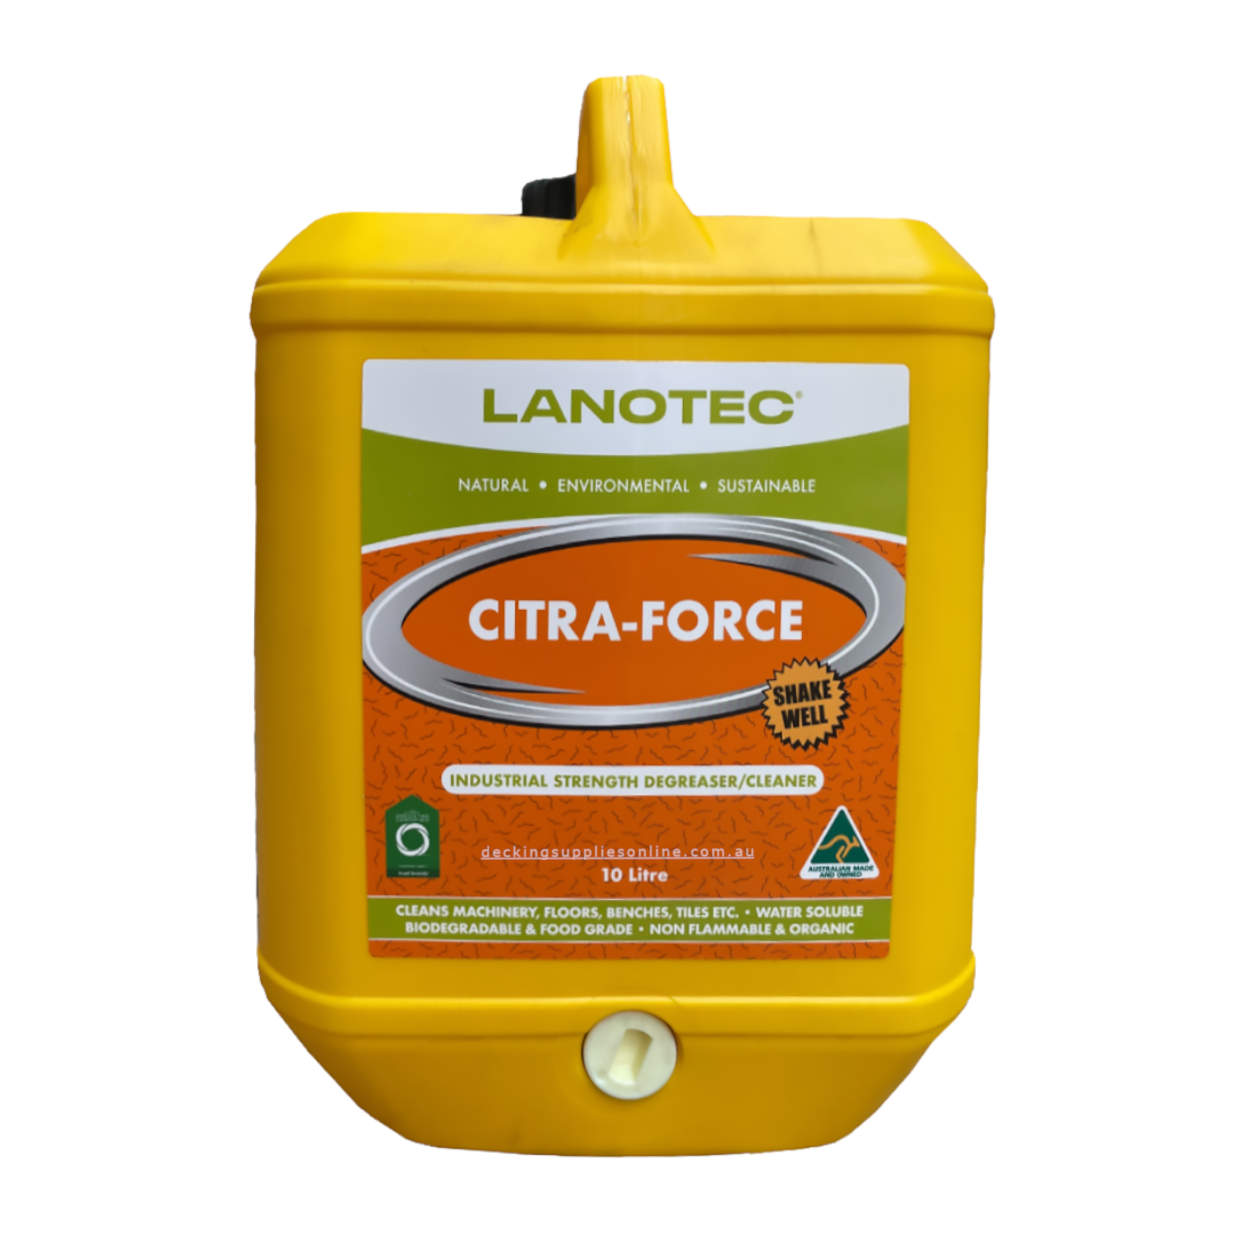 Lanotec_Citra_Force_10_litre_Decking_Supplies_Online